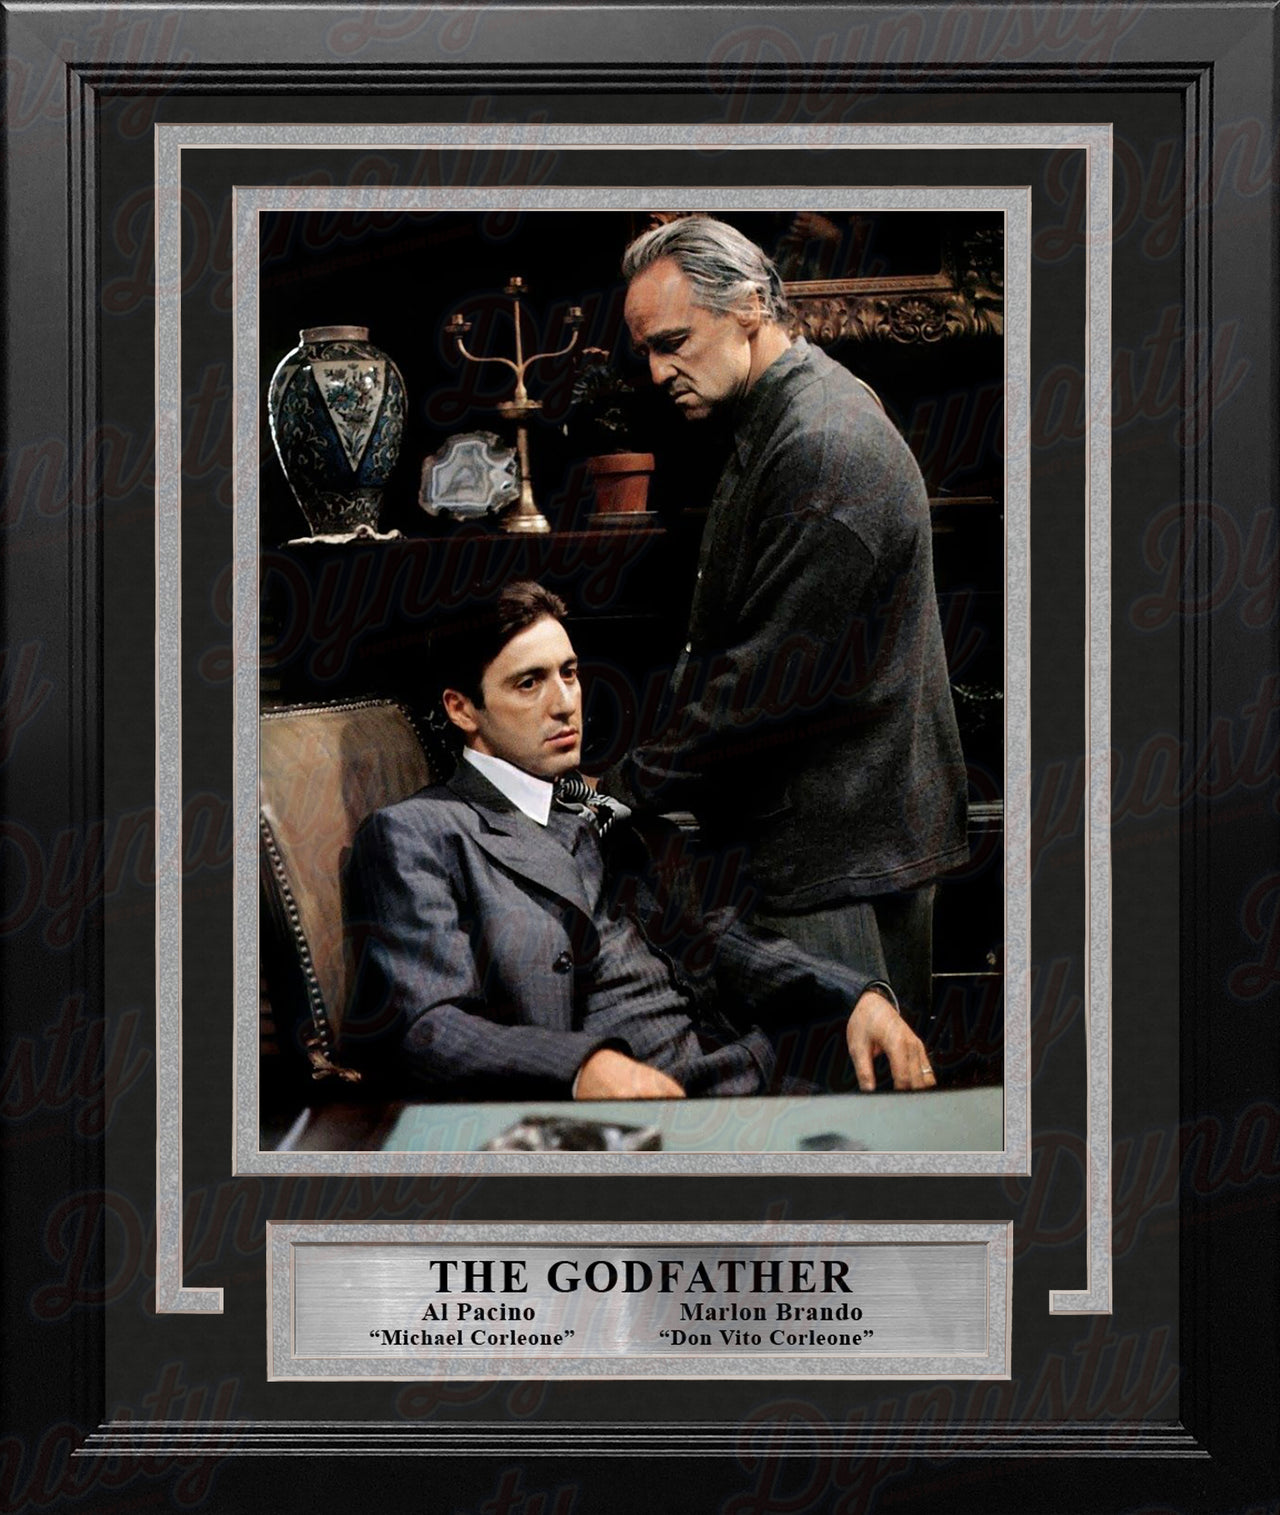 Marlon Brando & Al Pacino The Godfather 8" x 10" Framed Photo - Dynasty Sports & Framing 